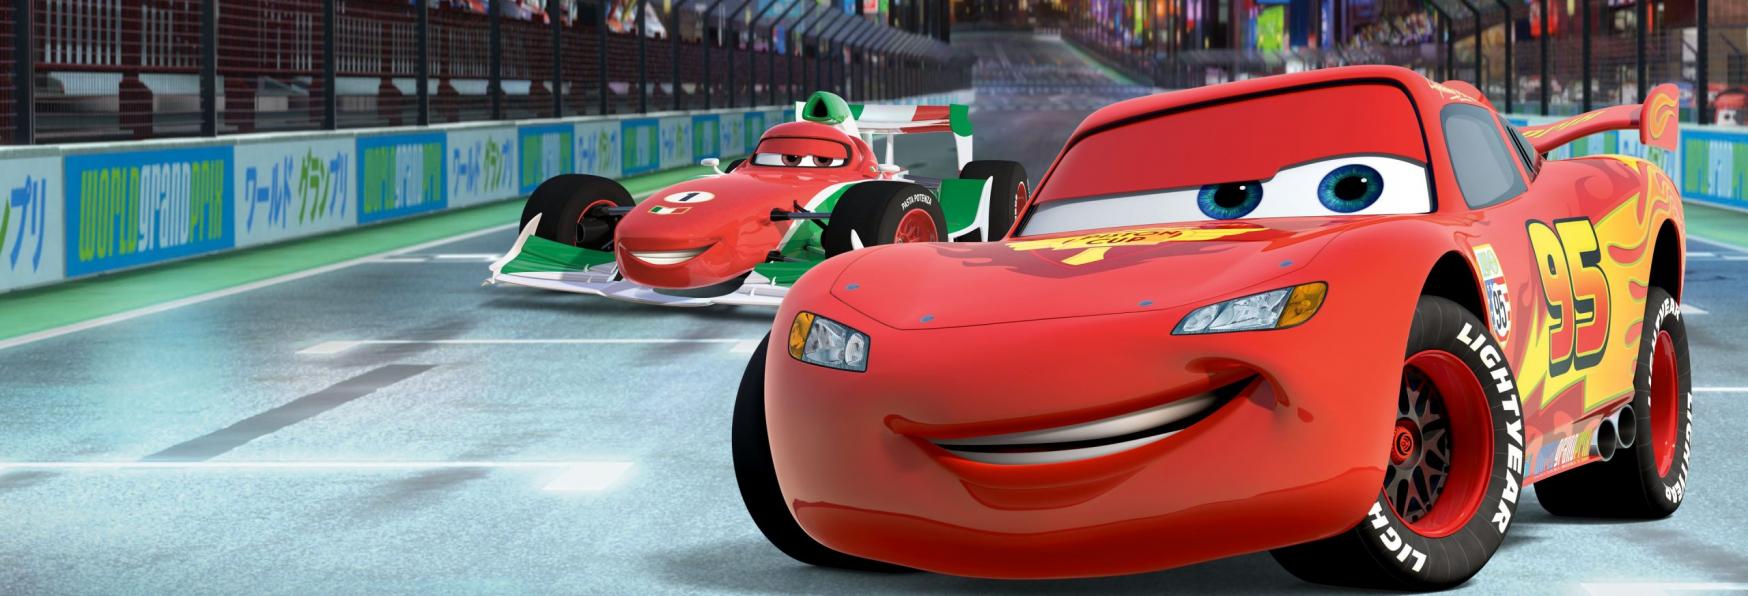 Cars: dopo i Film, è in arrivo una nuova Serie TV su Disney+